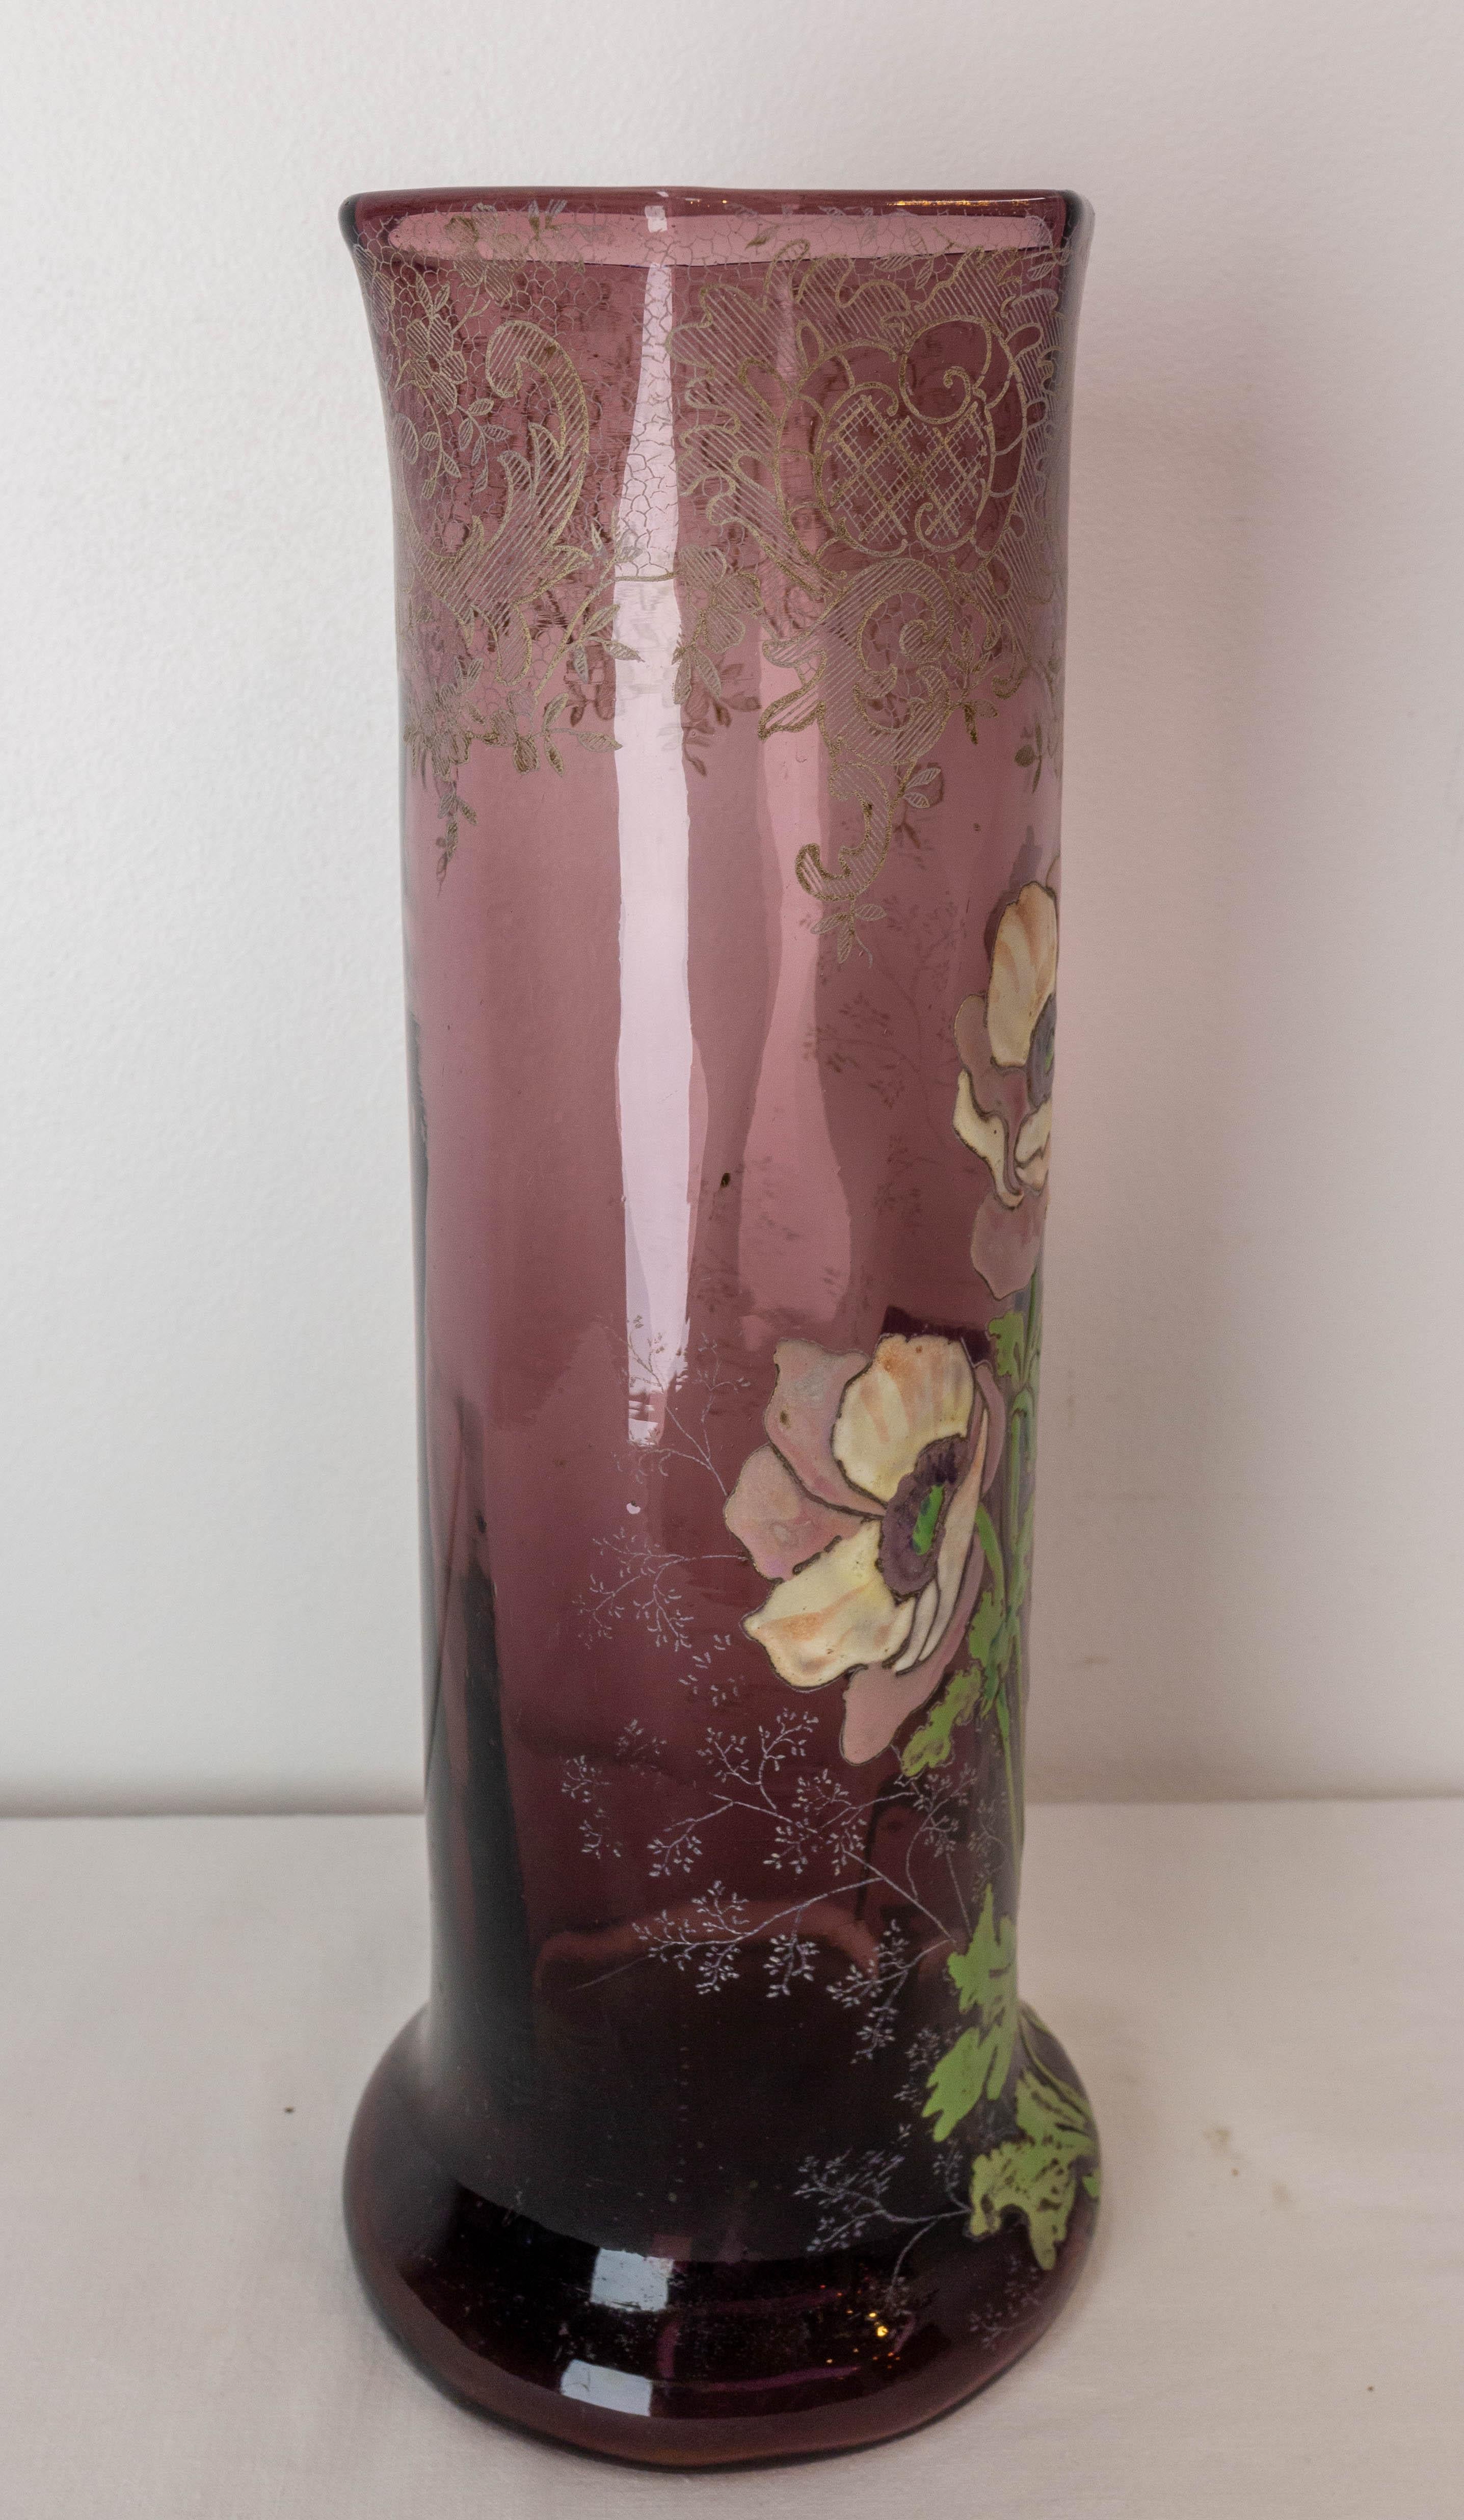 French Enamelled Glass Vase with Flowers Decoration Legras Art Nouveau, c. 1900 For Sale 1